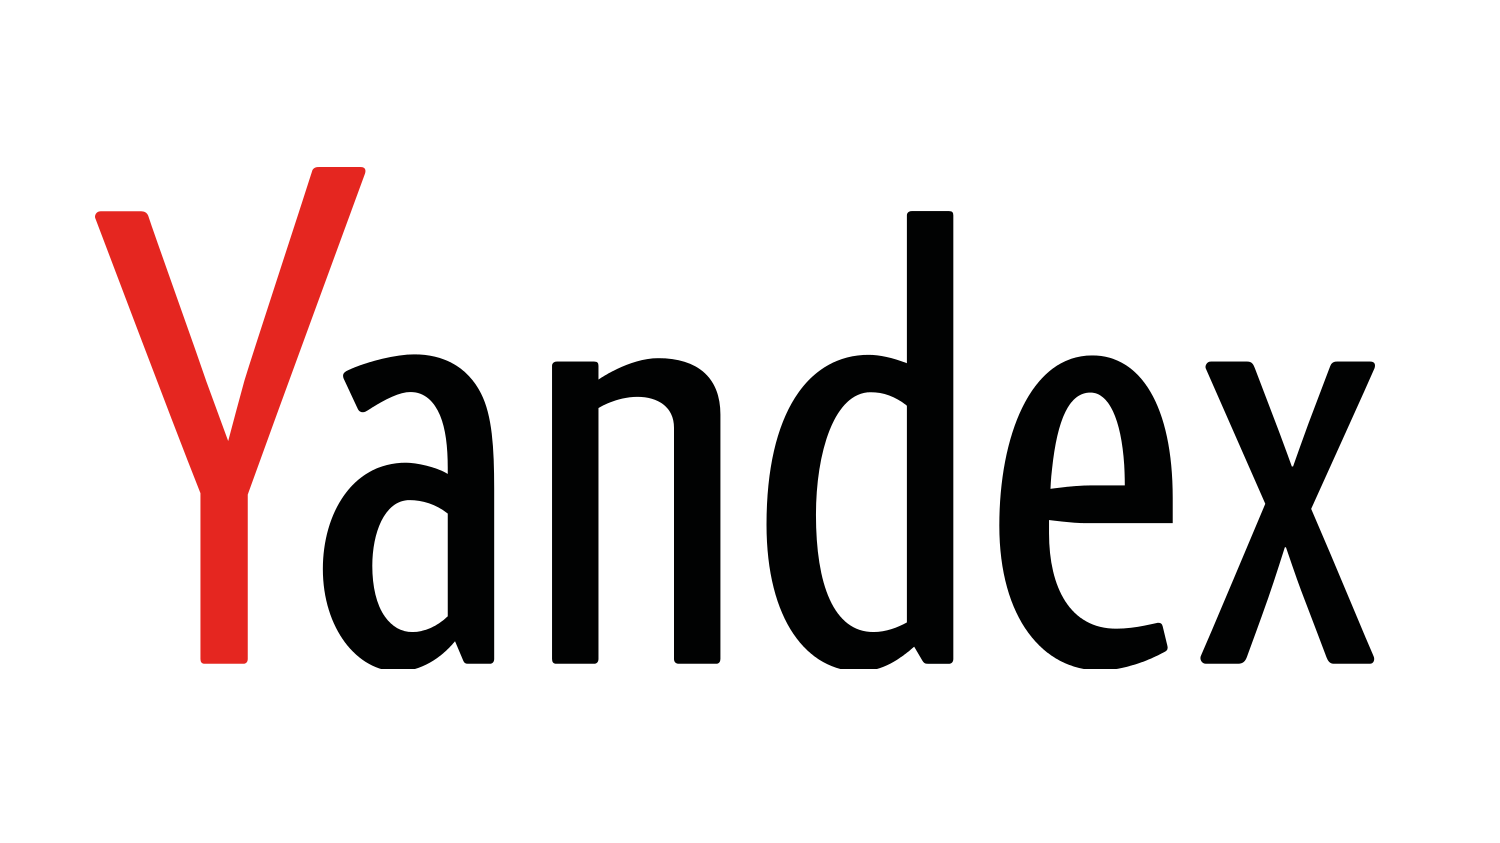 Yandex Logo Transparent Images PNG